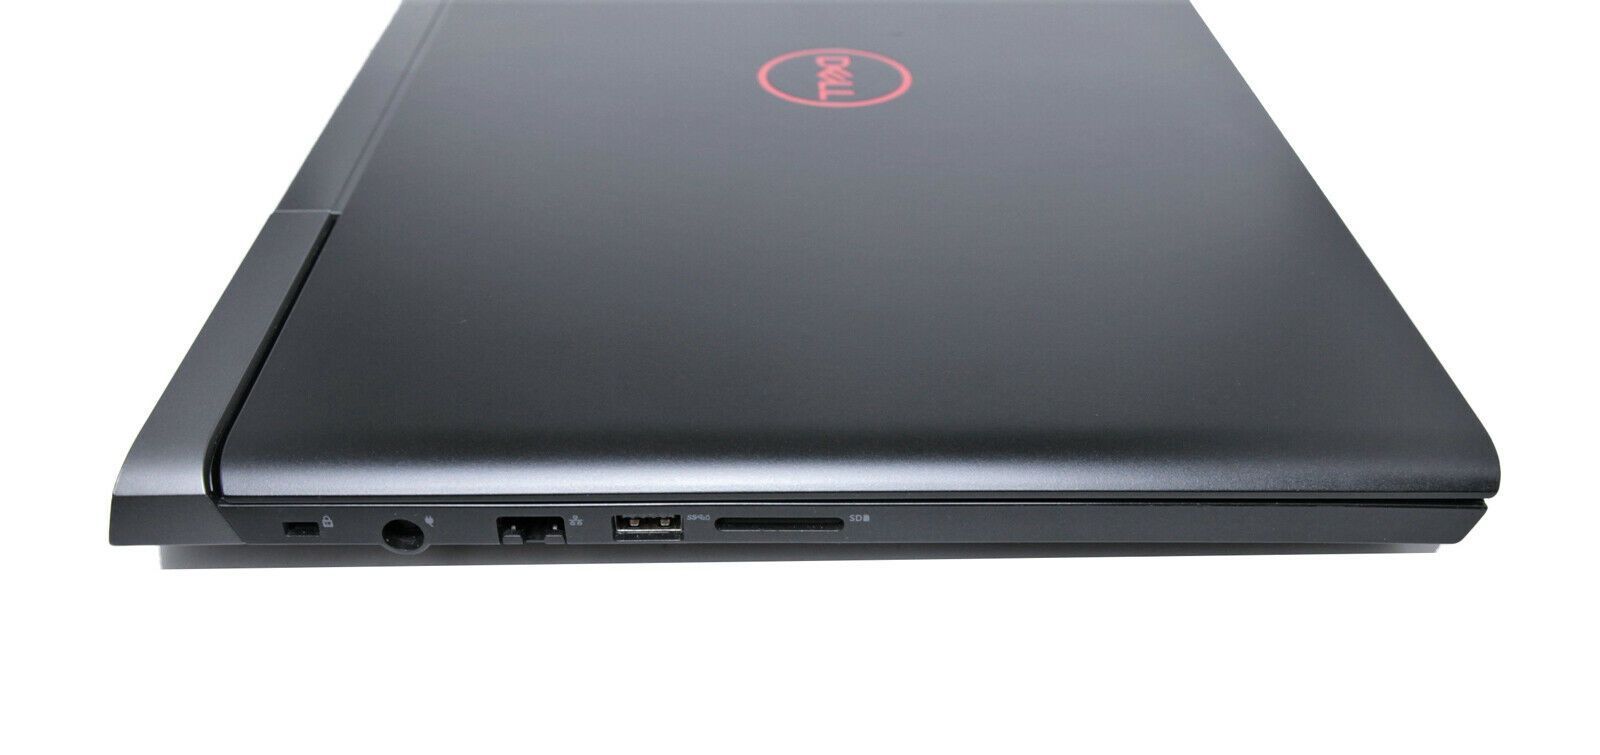 Dell 15 7577 IPS Gaming Laptop: GTX 1060 Max-Q, 256GB+ HDD, 16GB RAM - CruiseTech